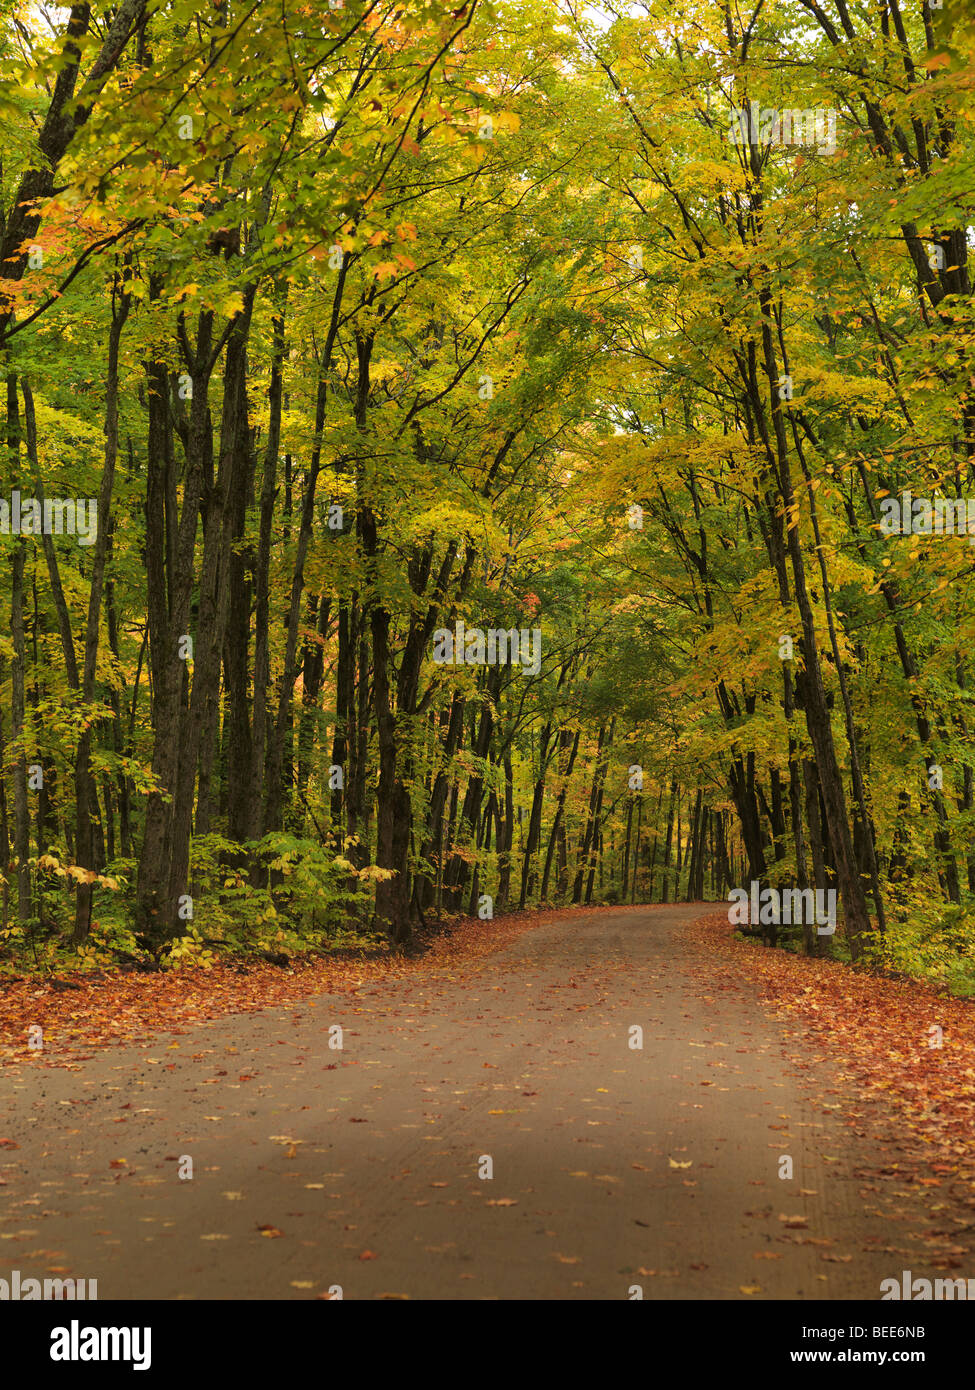 Winding unpaved road through beautiful fall nature scenery. Stock Photo